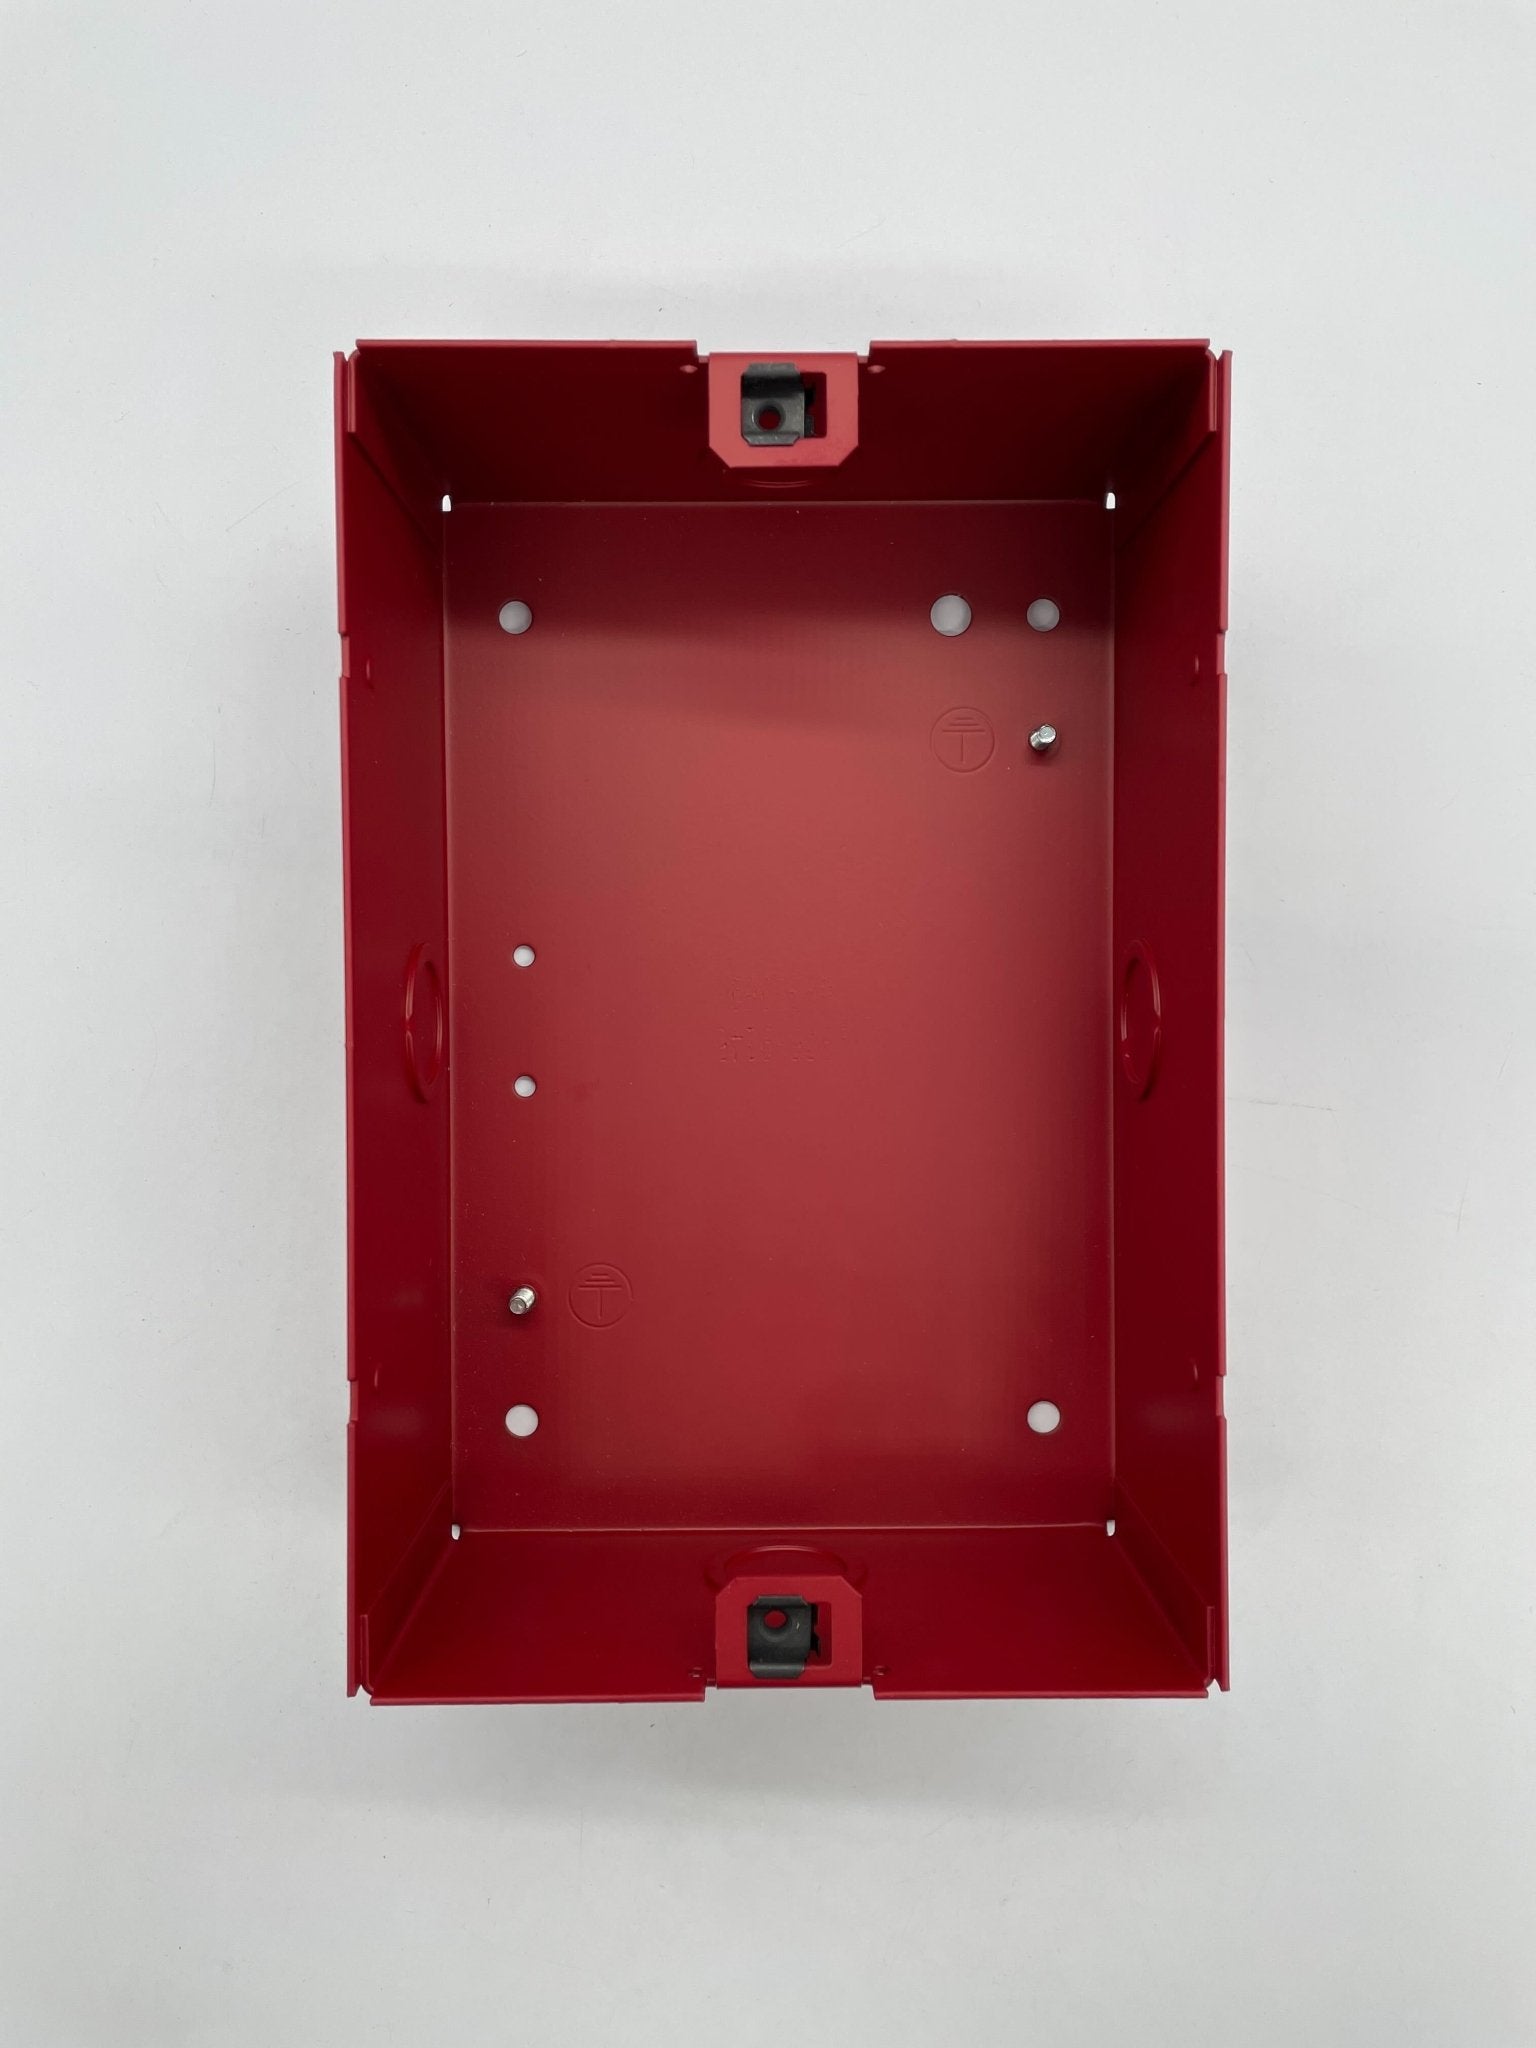 Simplex 2975-9145 - The Fire Alarm Supplier